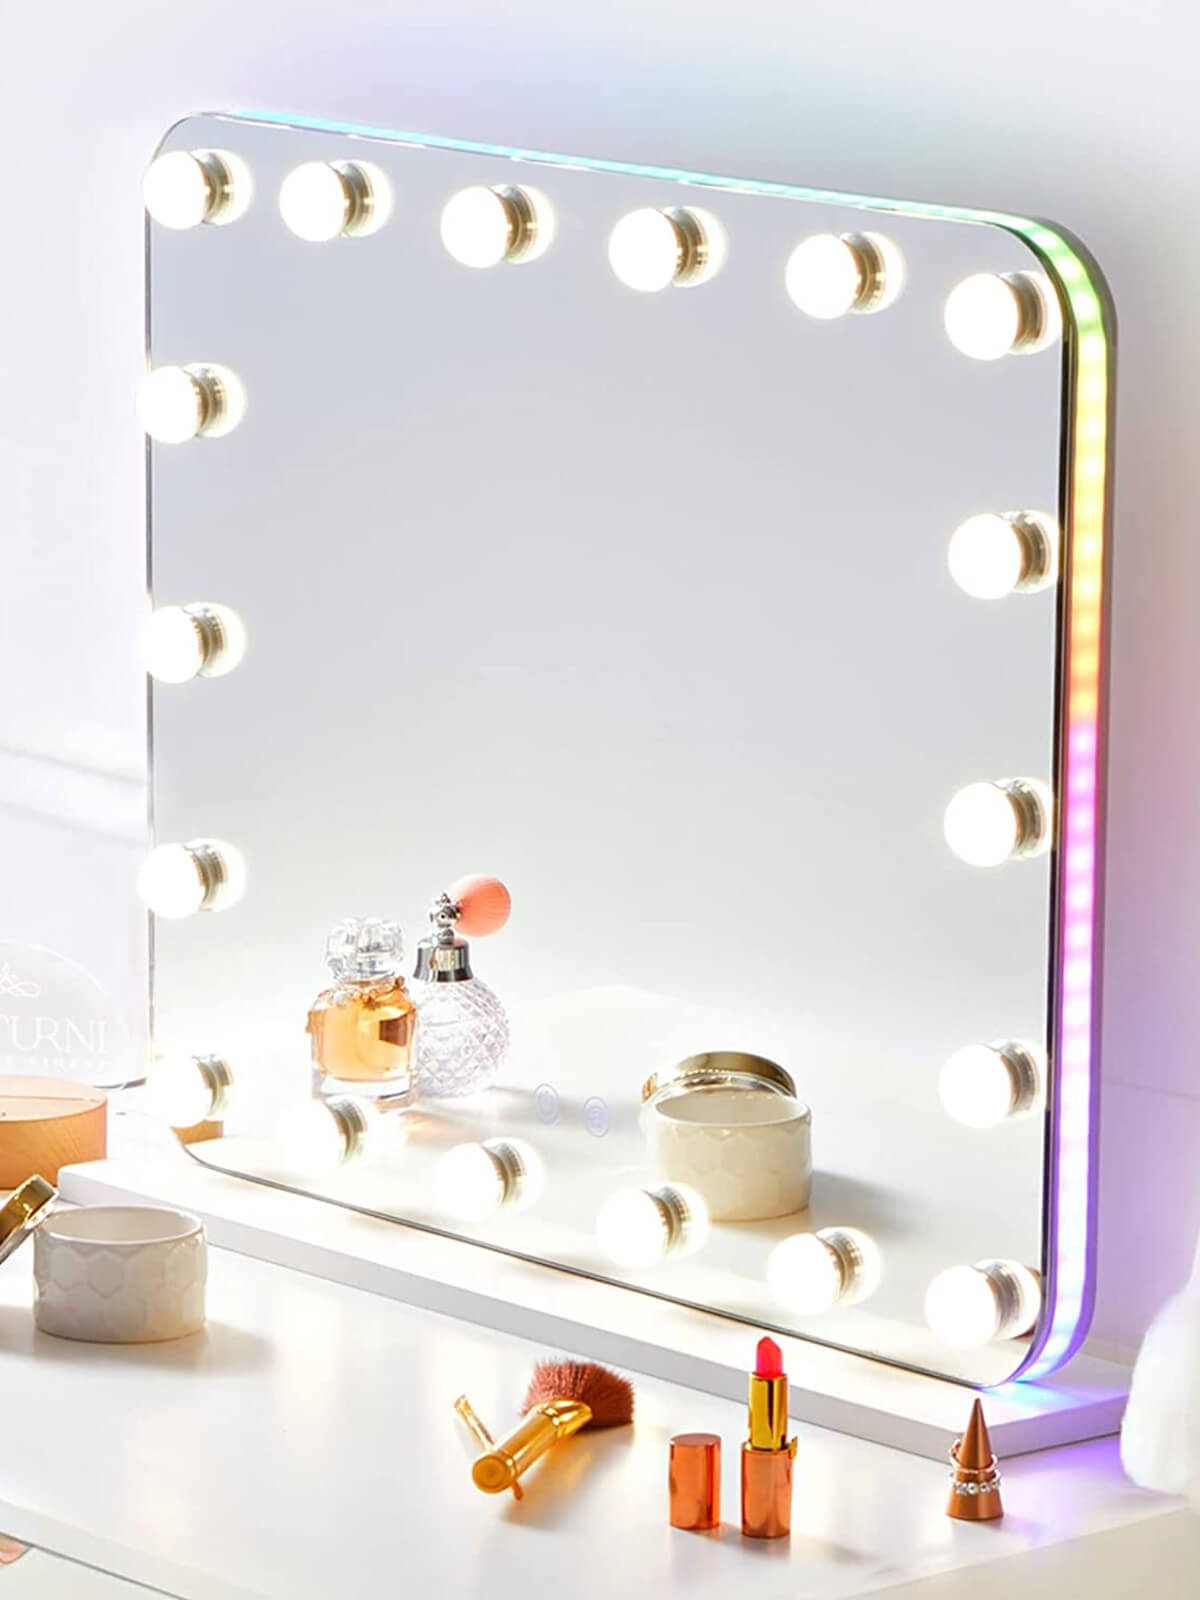 LUXFURNI | Tabletop Hollywood Vanity Mirror | Table Top | White | RGB LED Lights | Bloom